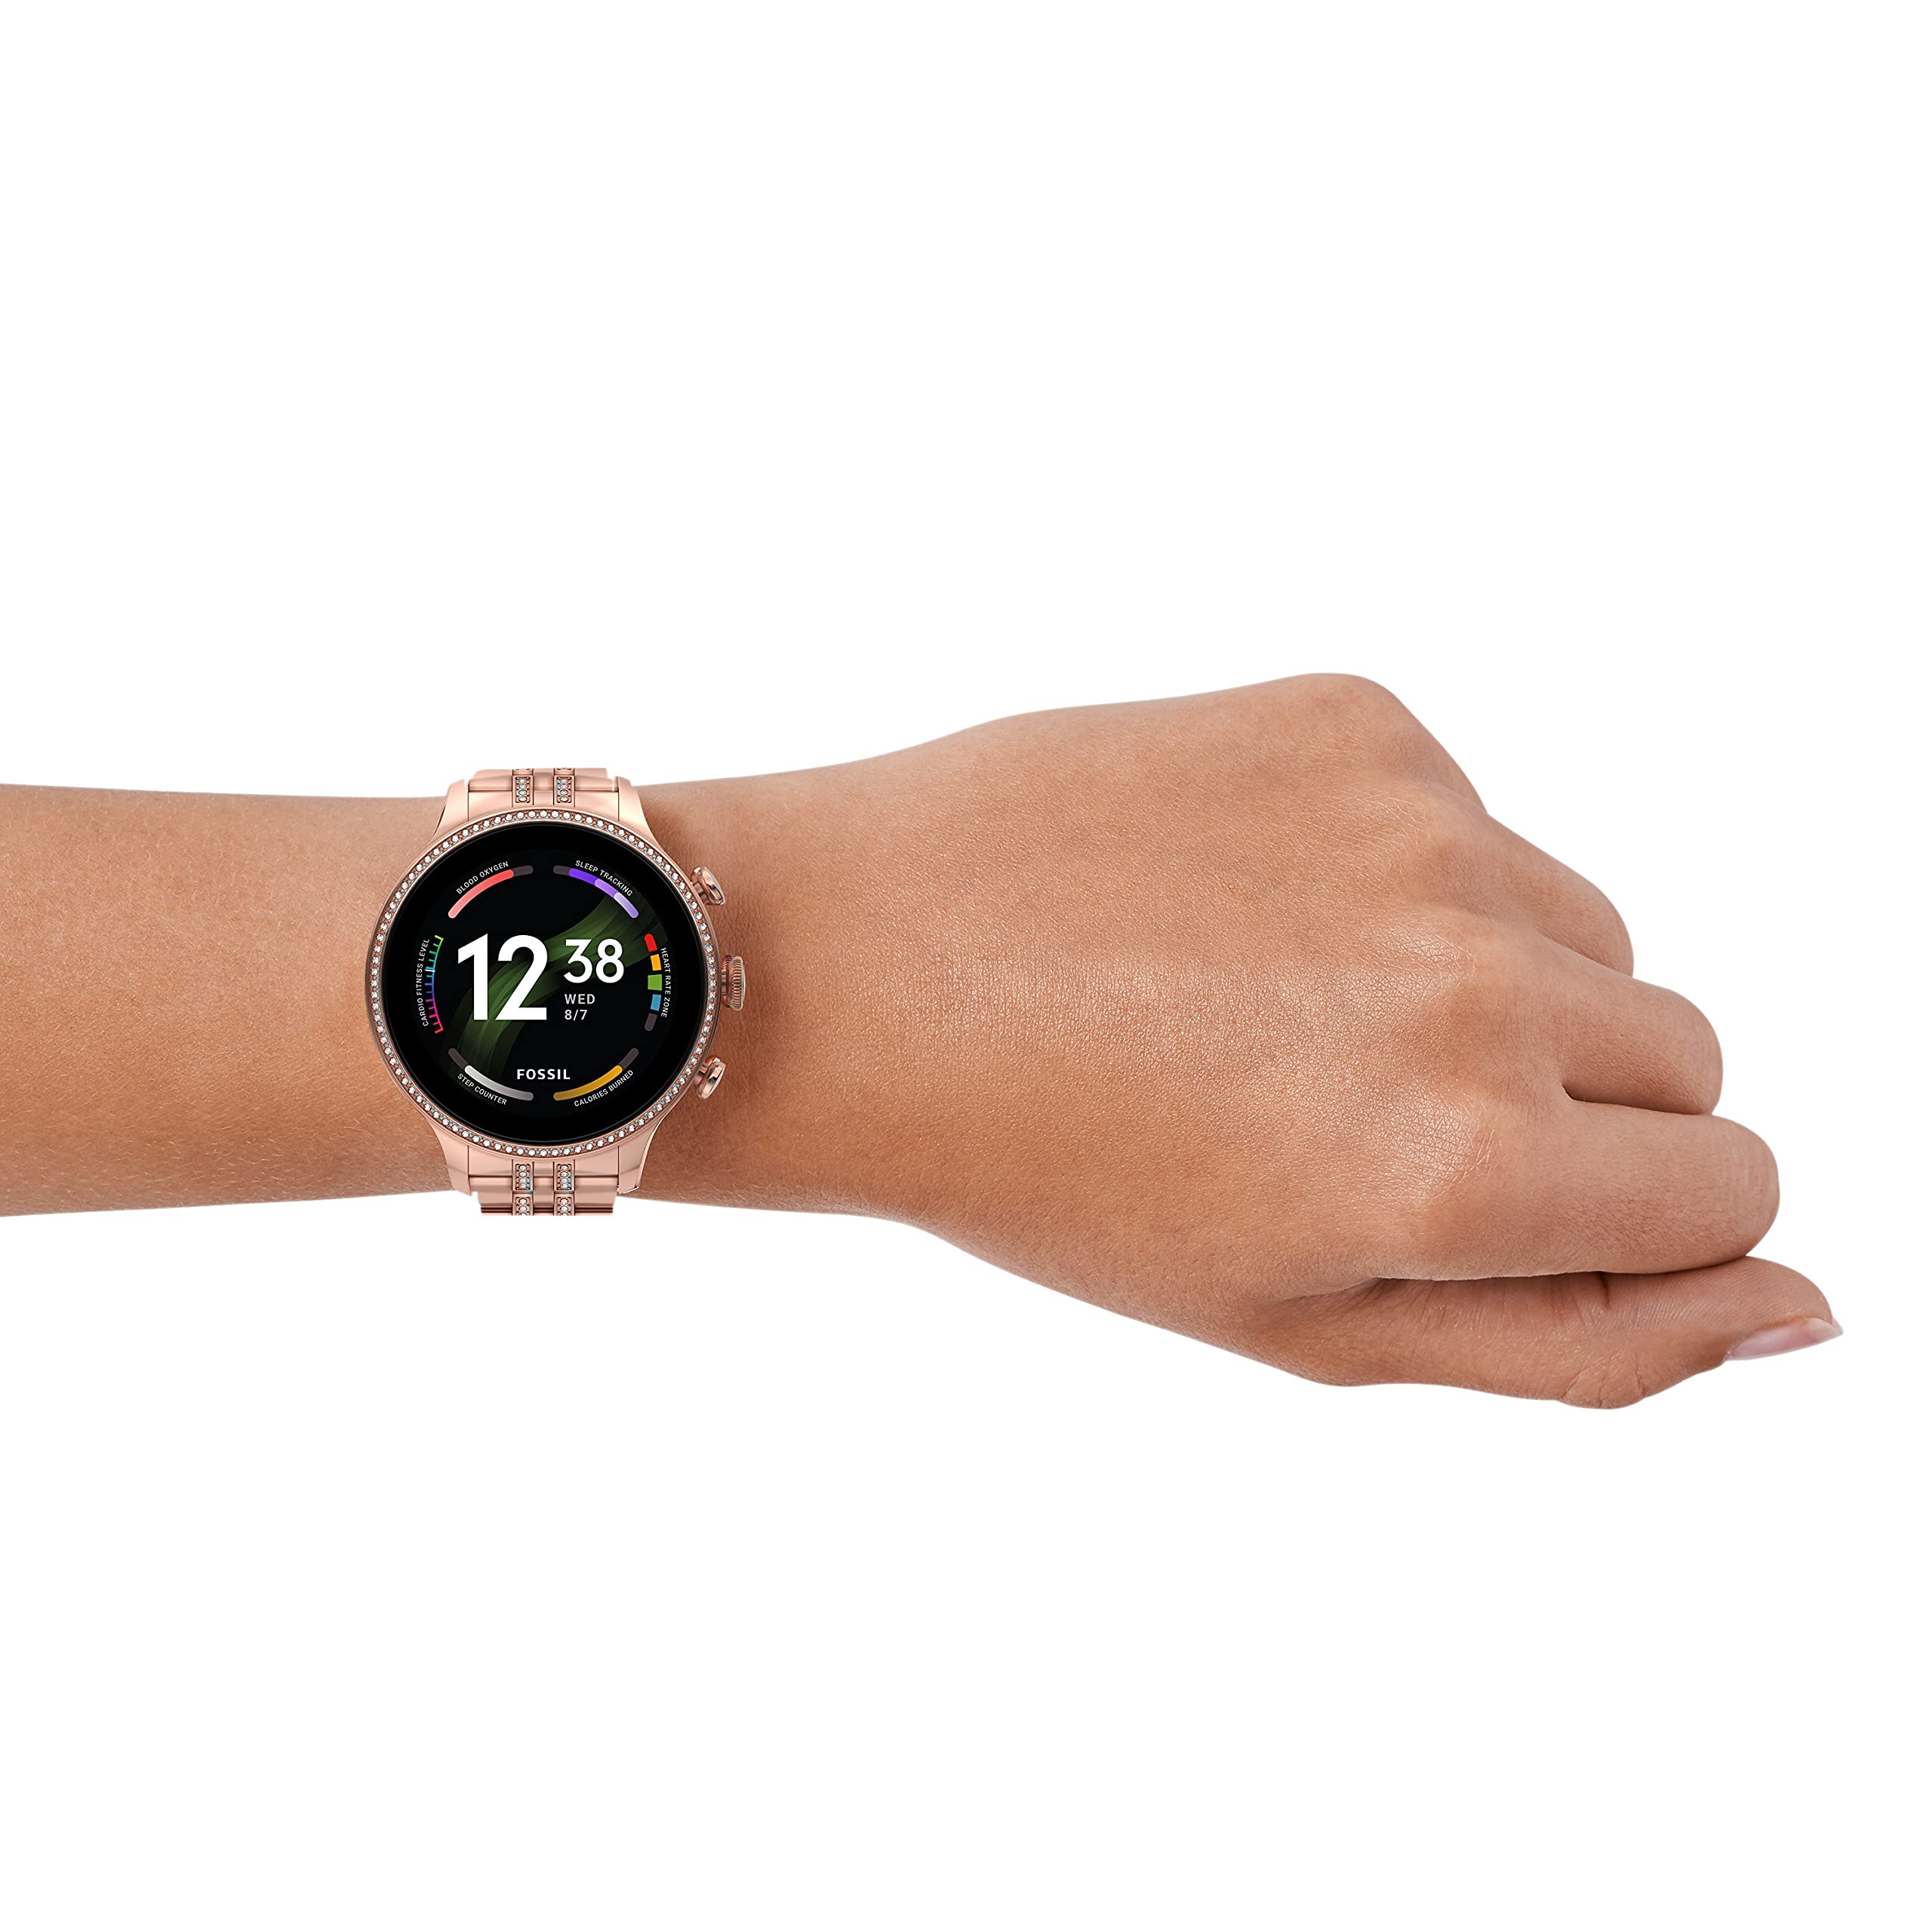 Fossil Women's Gen 6 42mm Touchscreen Smart Watch with Alexa Built-In, Fitness Tracker, Sleep Tracker, Heart Rate Monitor, GPS, Speaker, Music Control, Smartphone Notifications